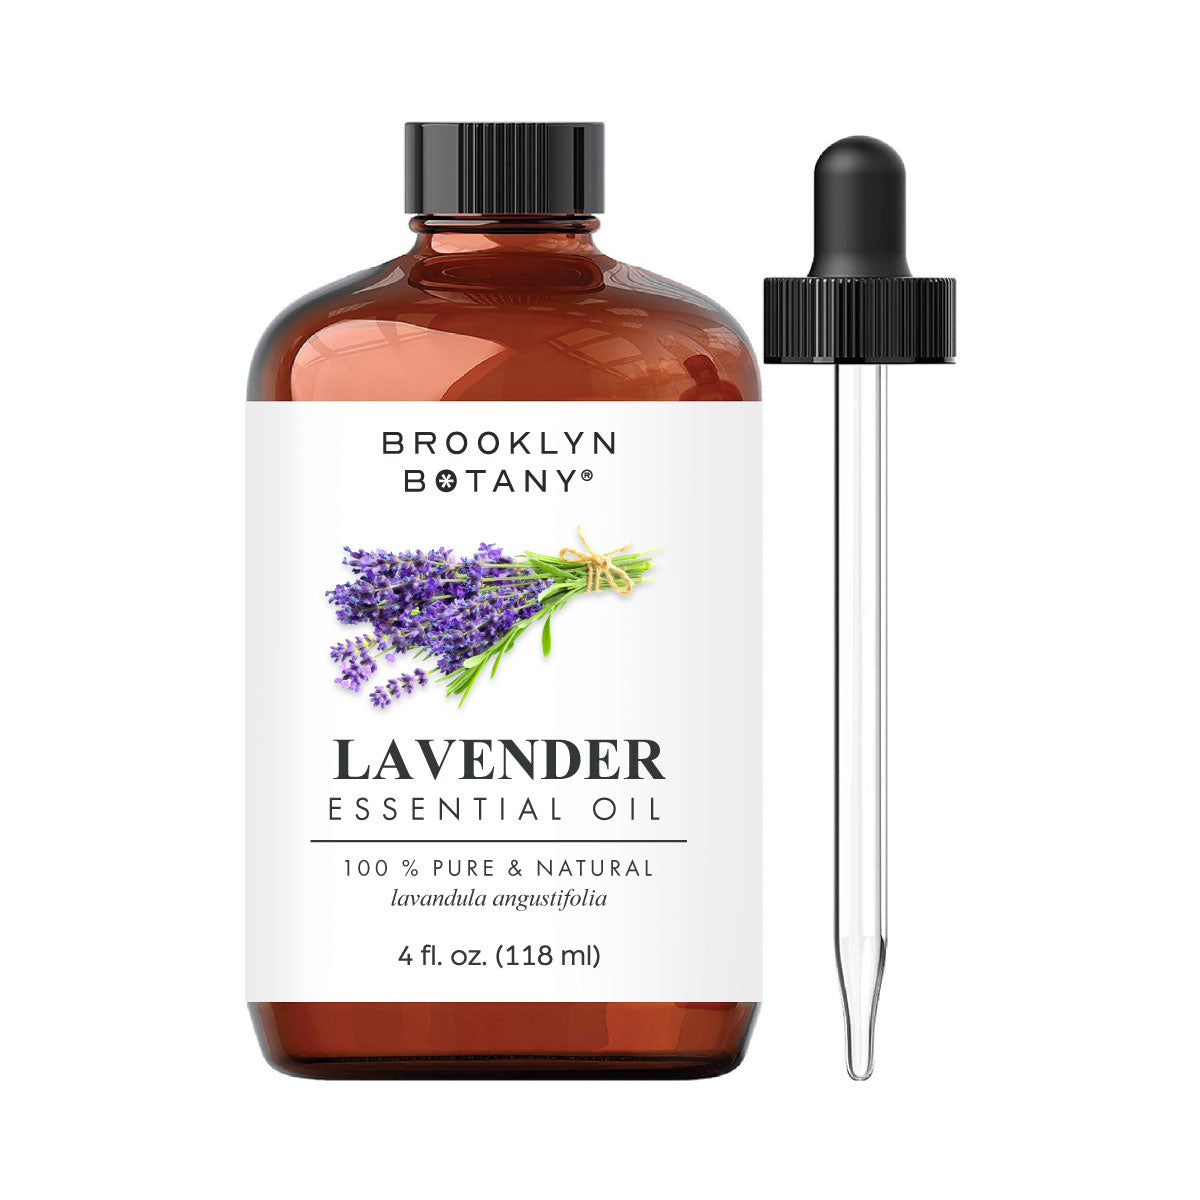 SHOPIFY_-BB-Lavender-Essential-Oil-Main-Image-1.jpg